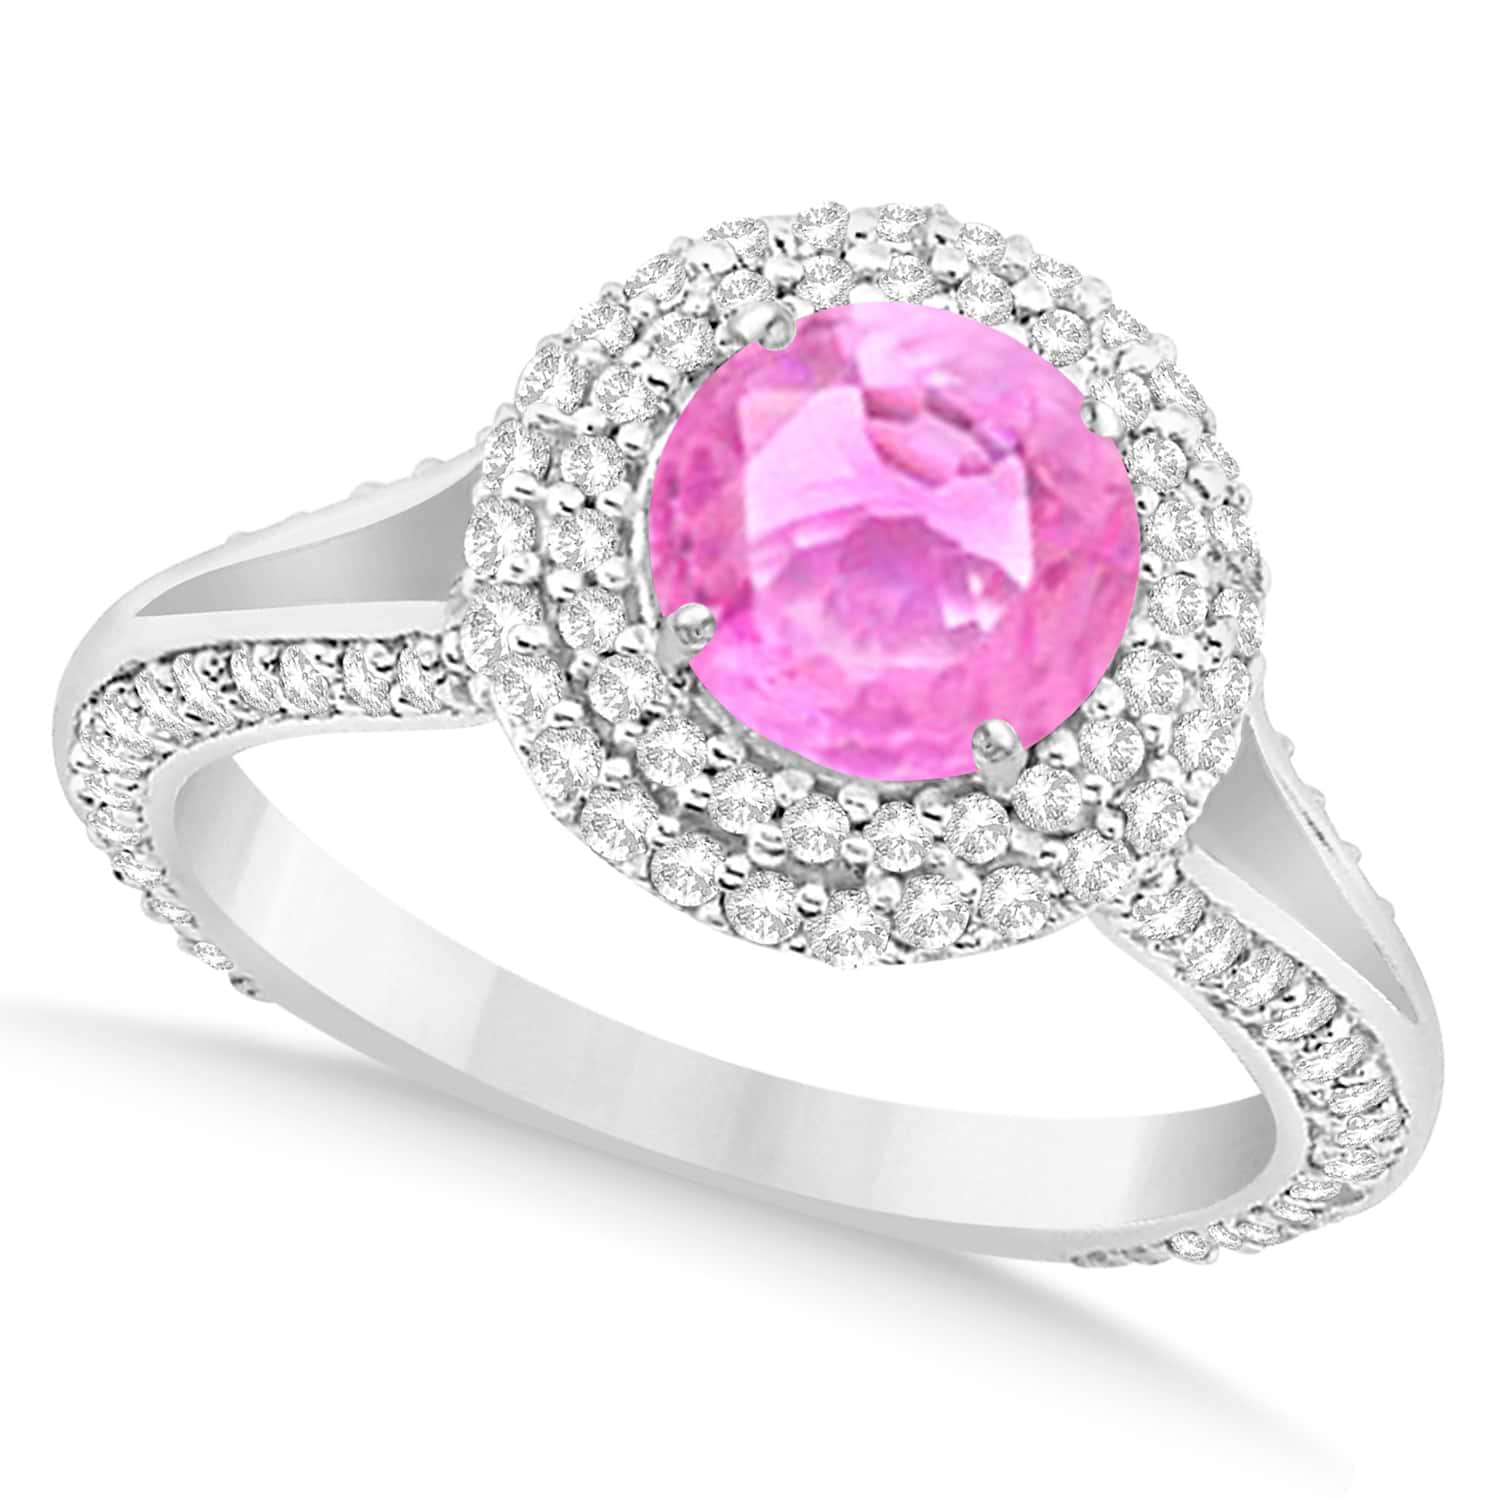 Halo Pink Sapphire & Diamond Engagement Ring 14k White Gold (2.41ct)